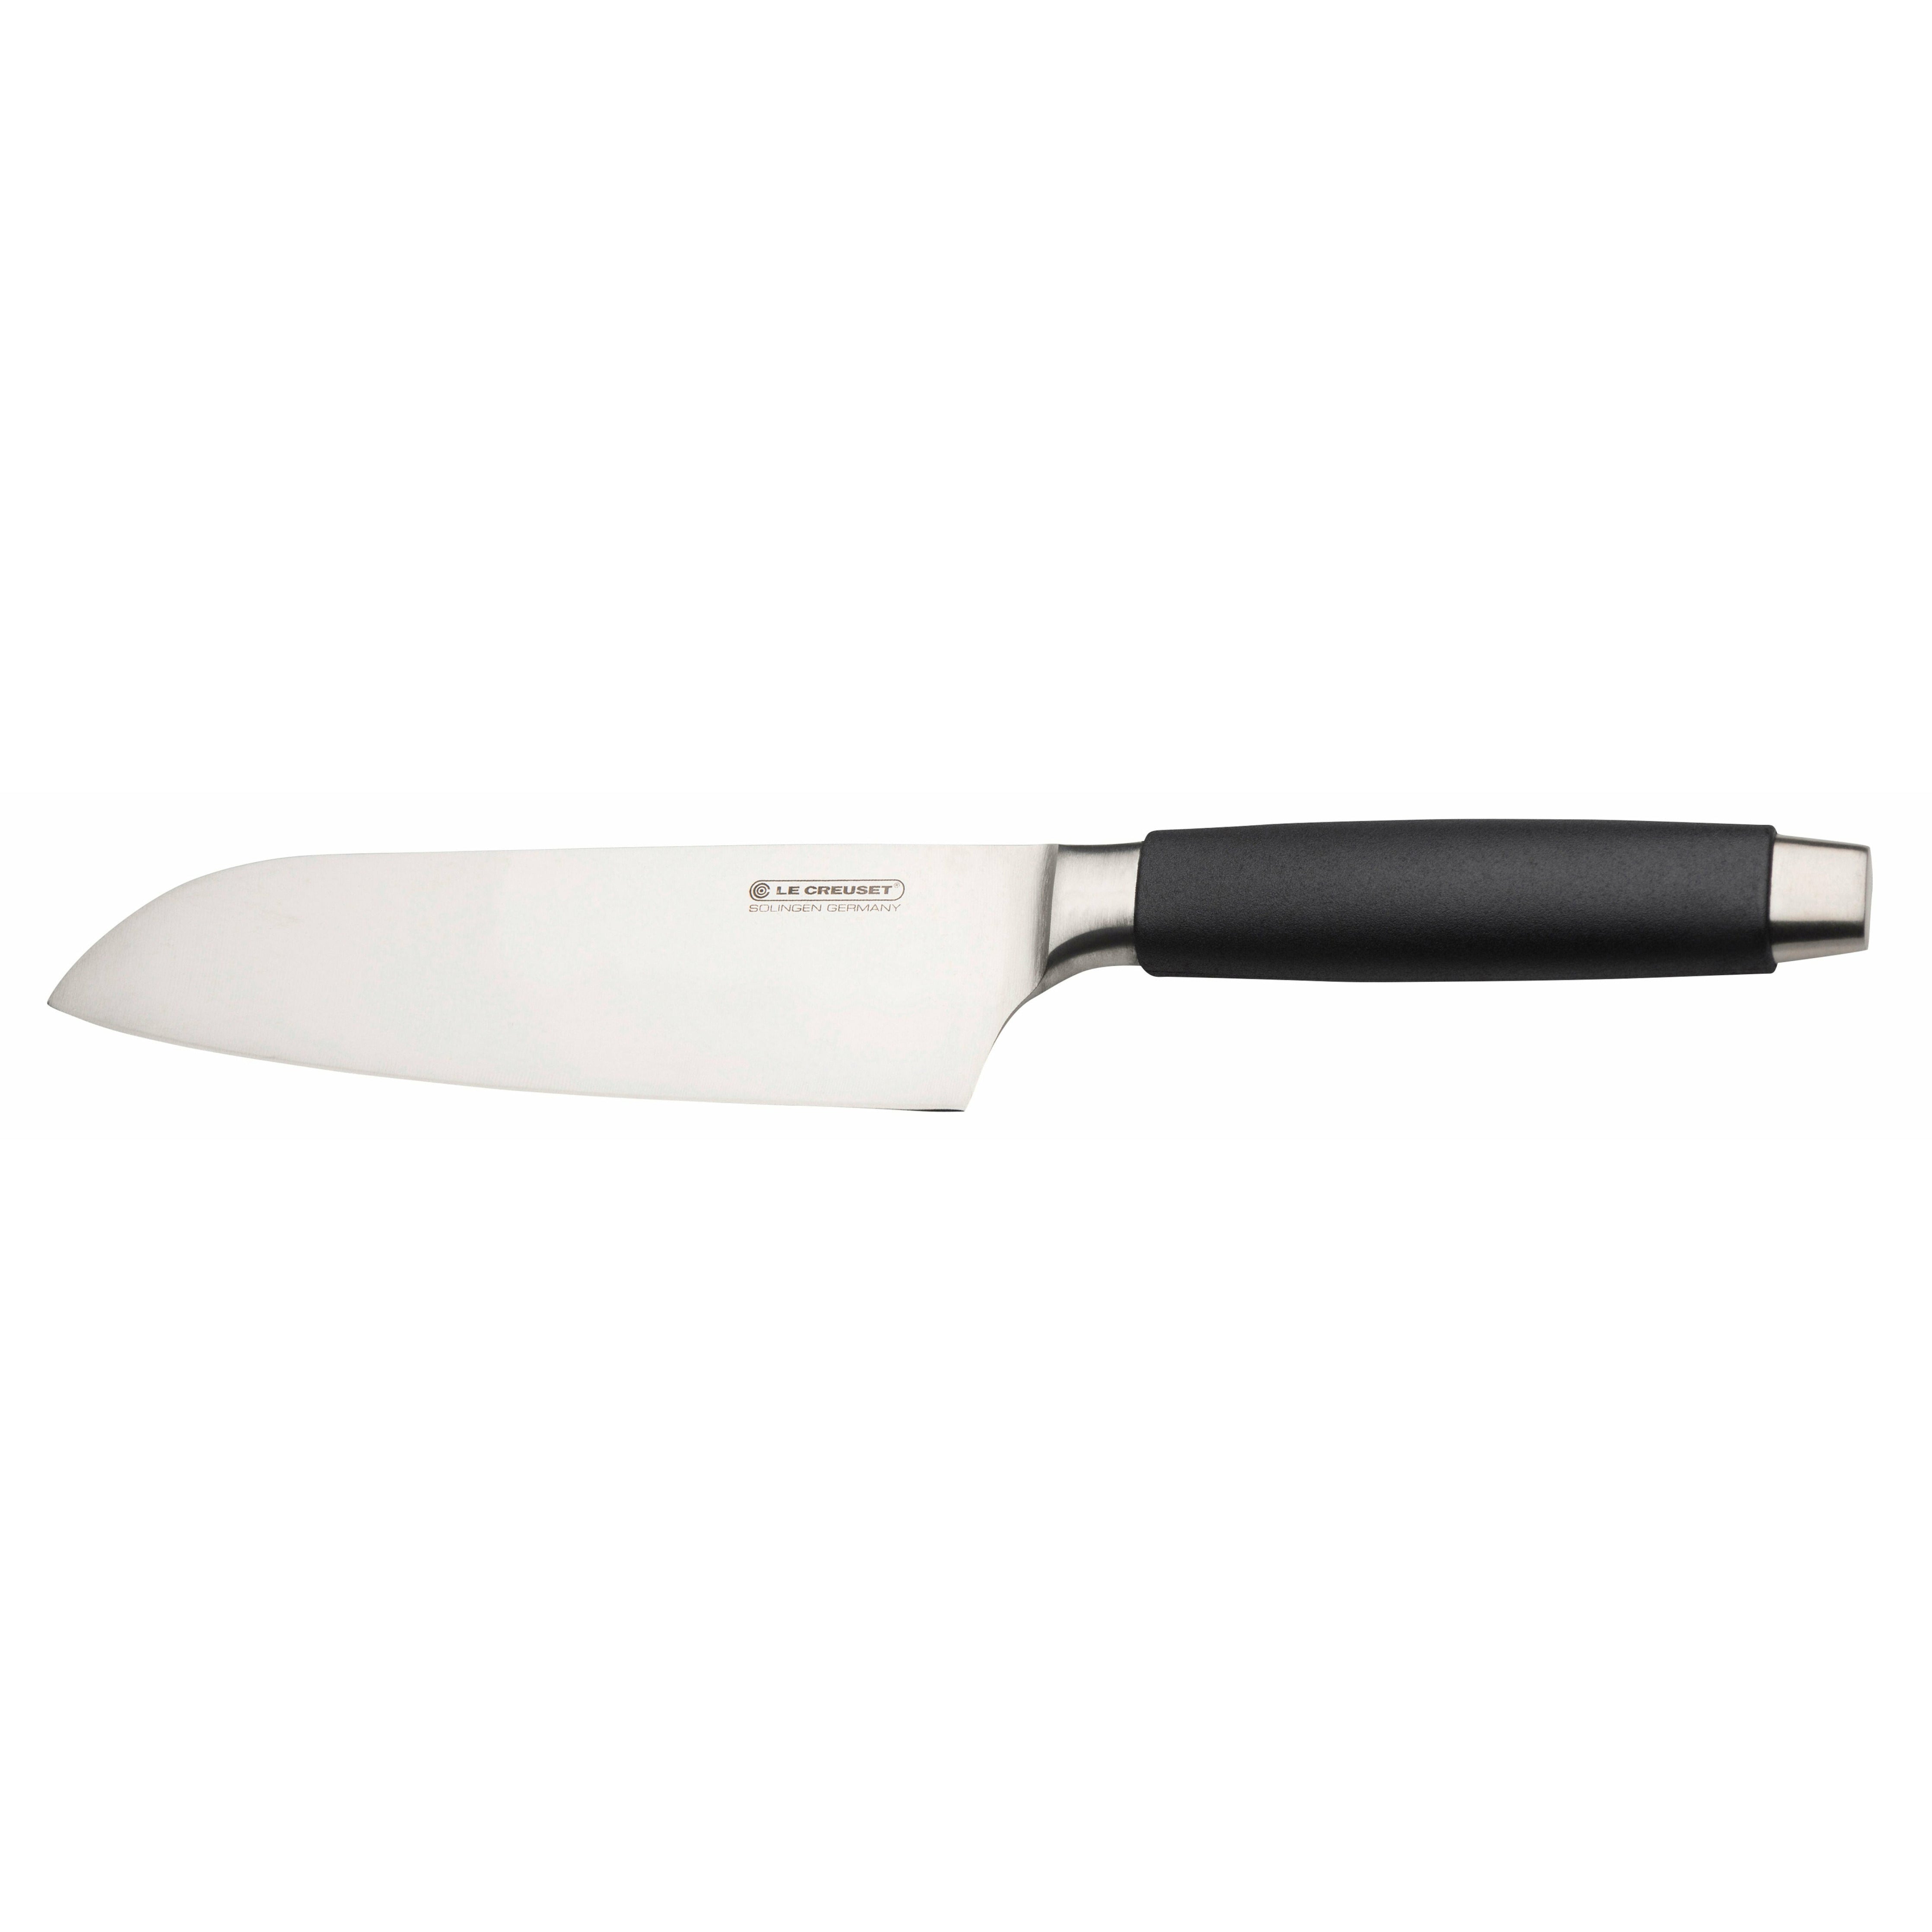 Le Creuset Santoku-Messer Standard mit schwarzem Griff, 18 cm